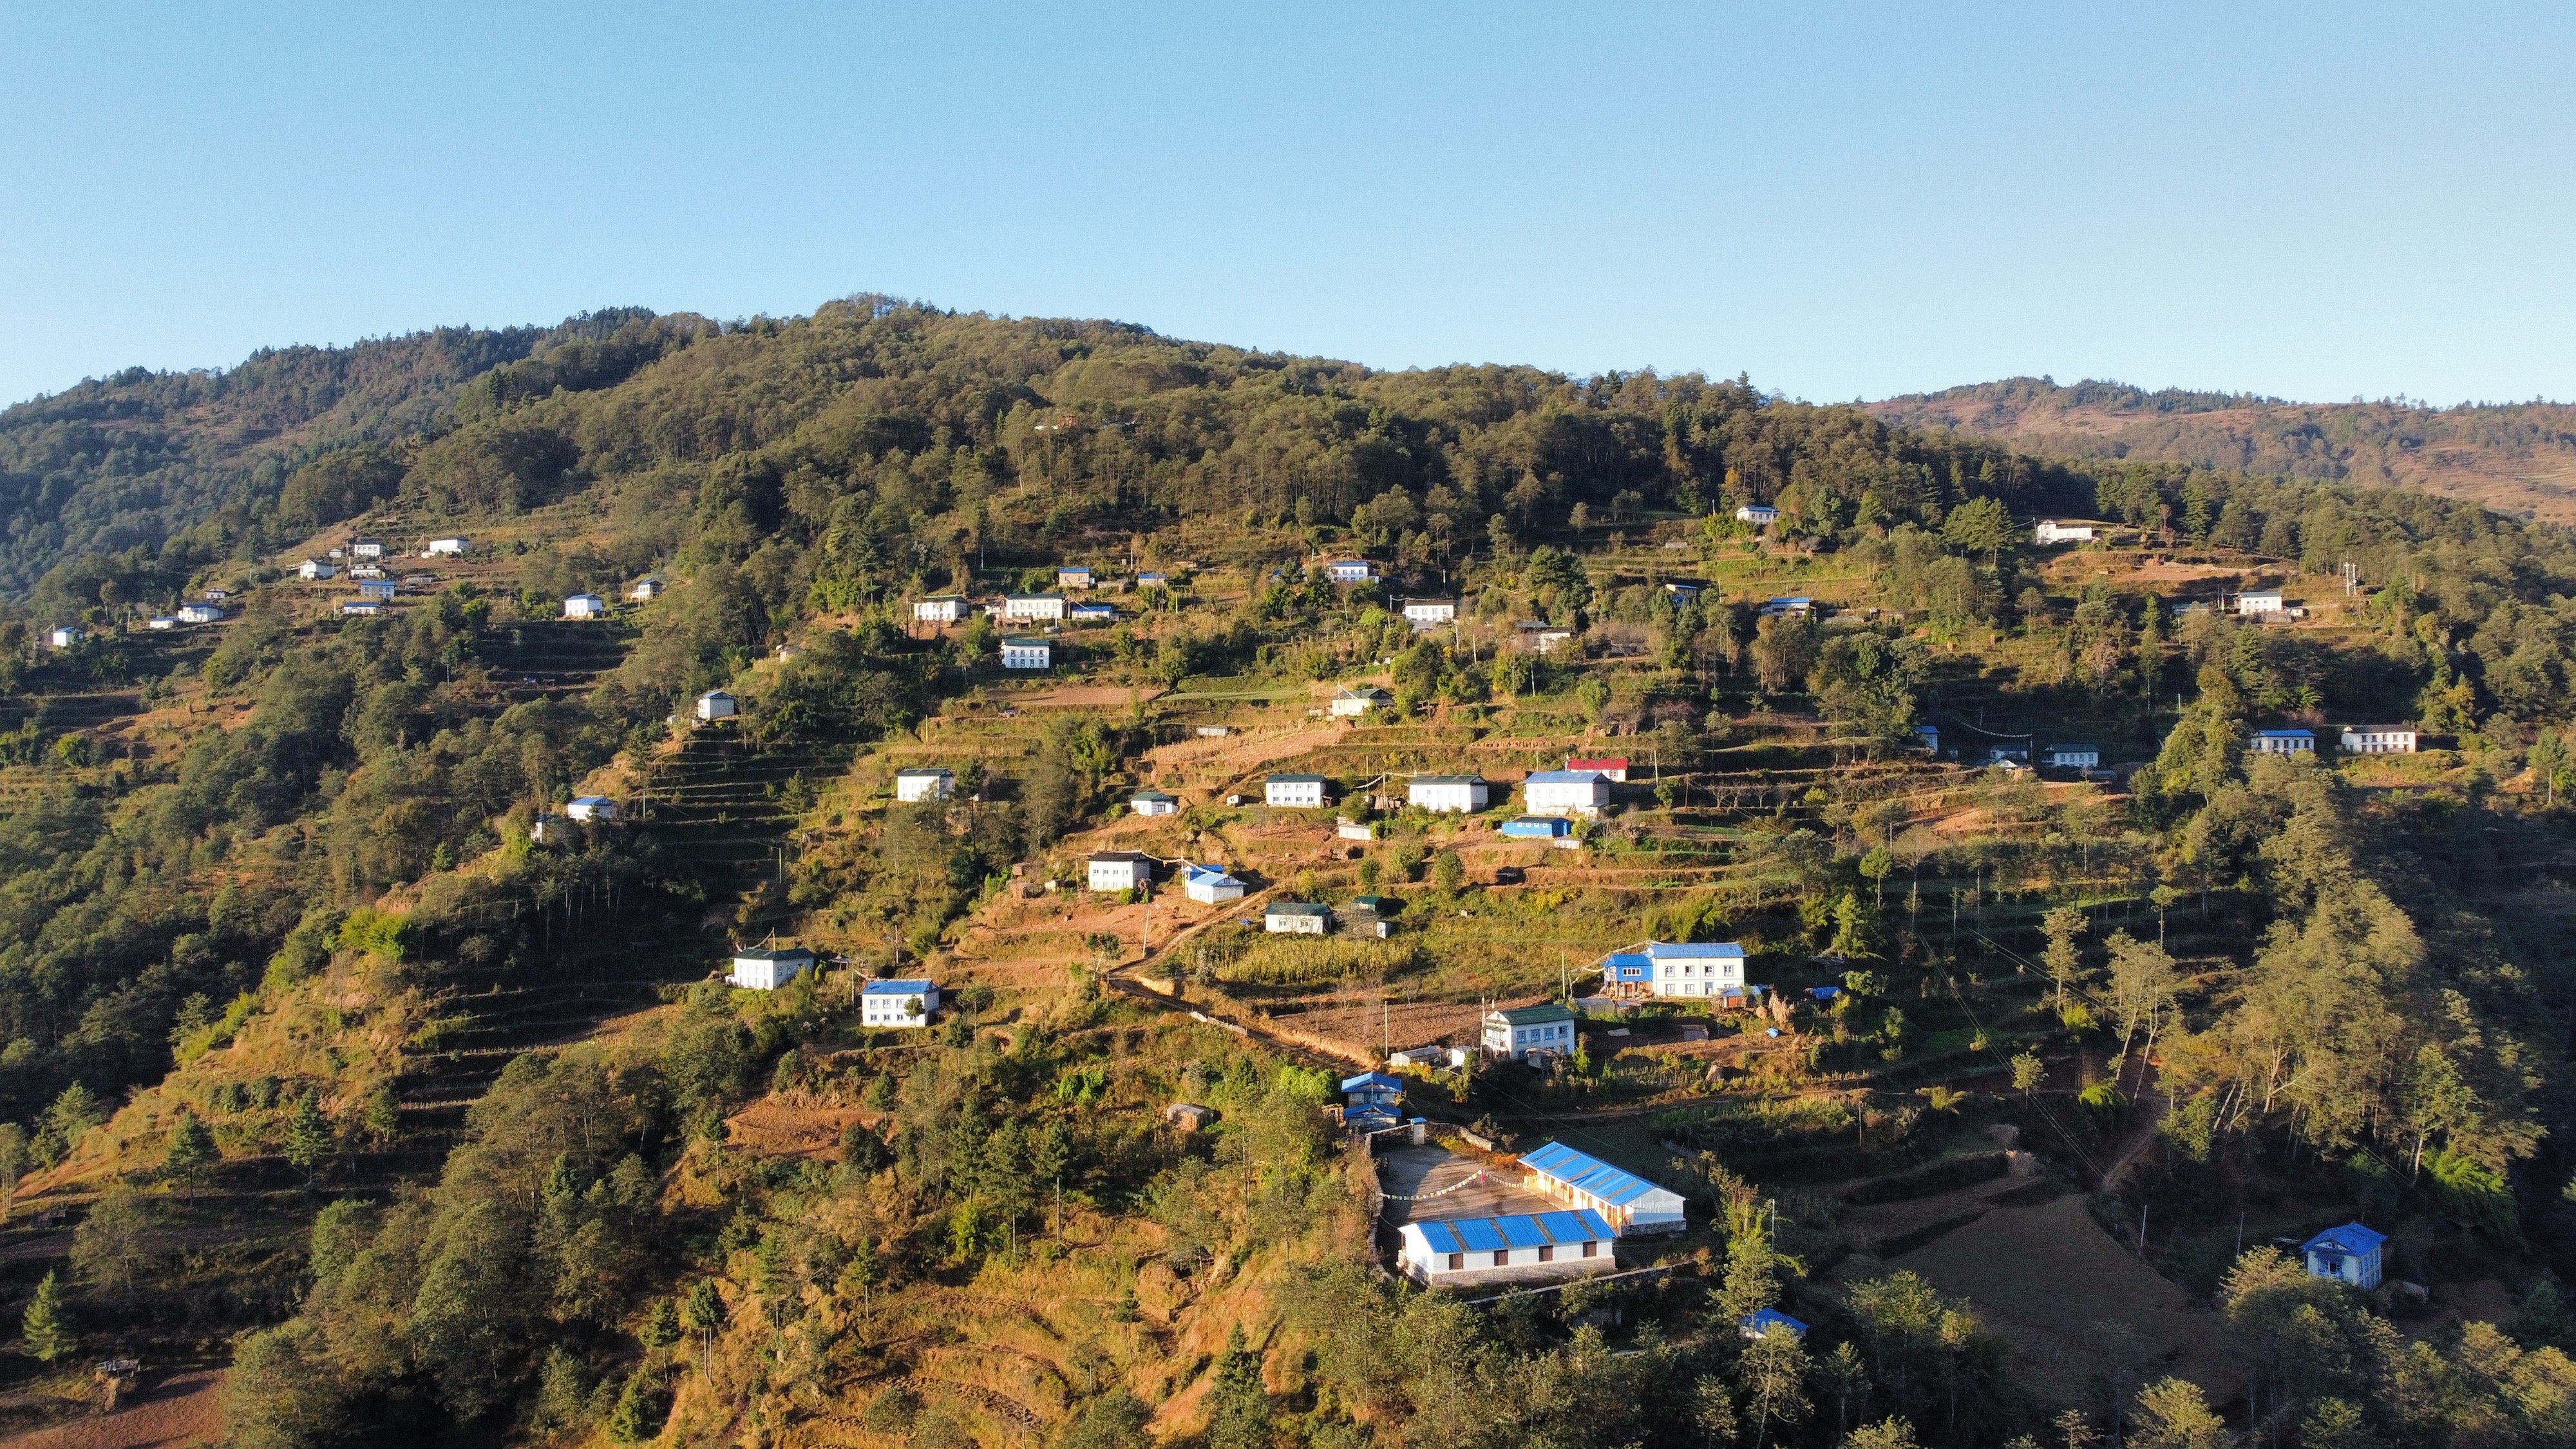 Chyangba Village